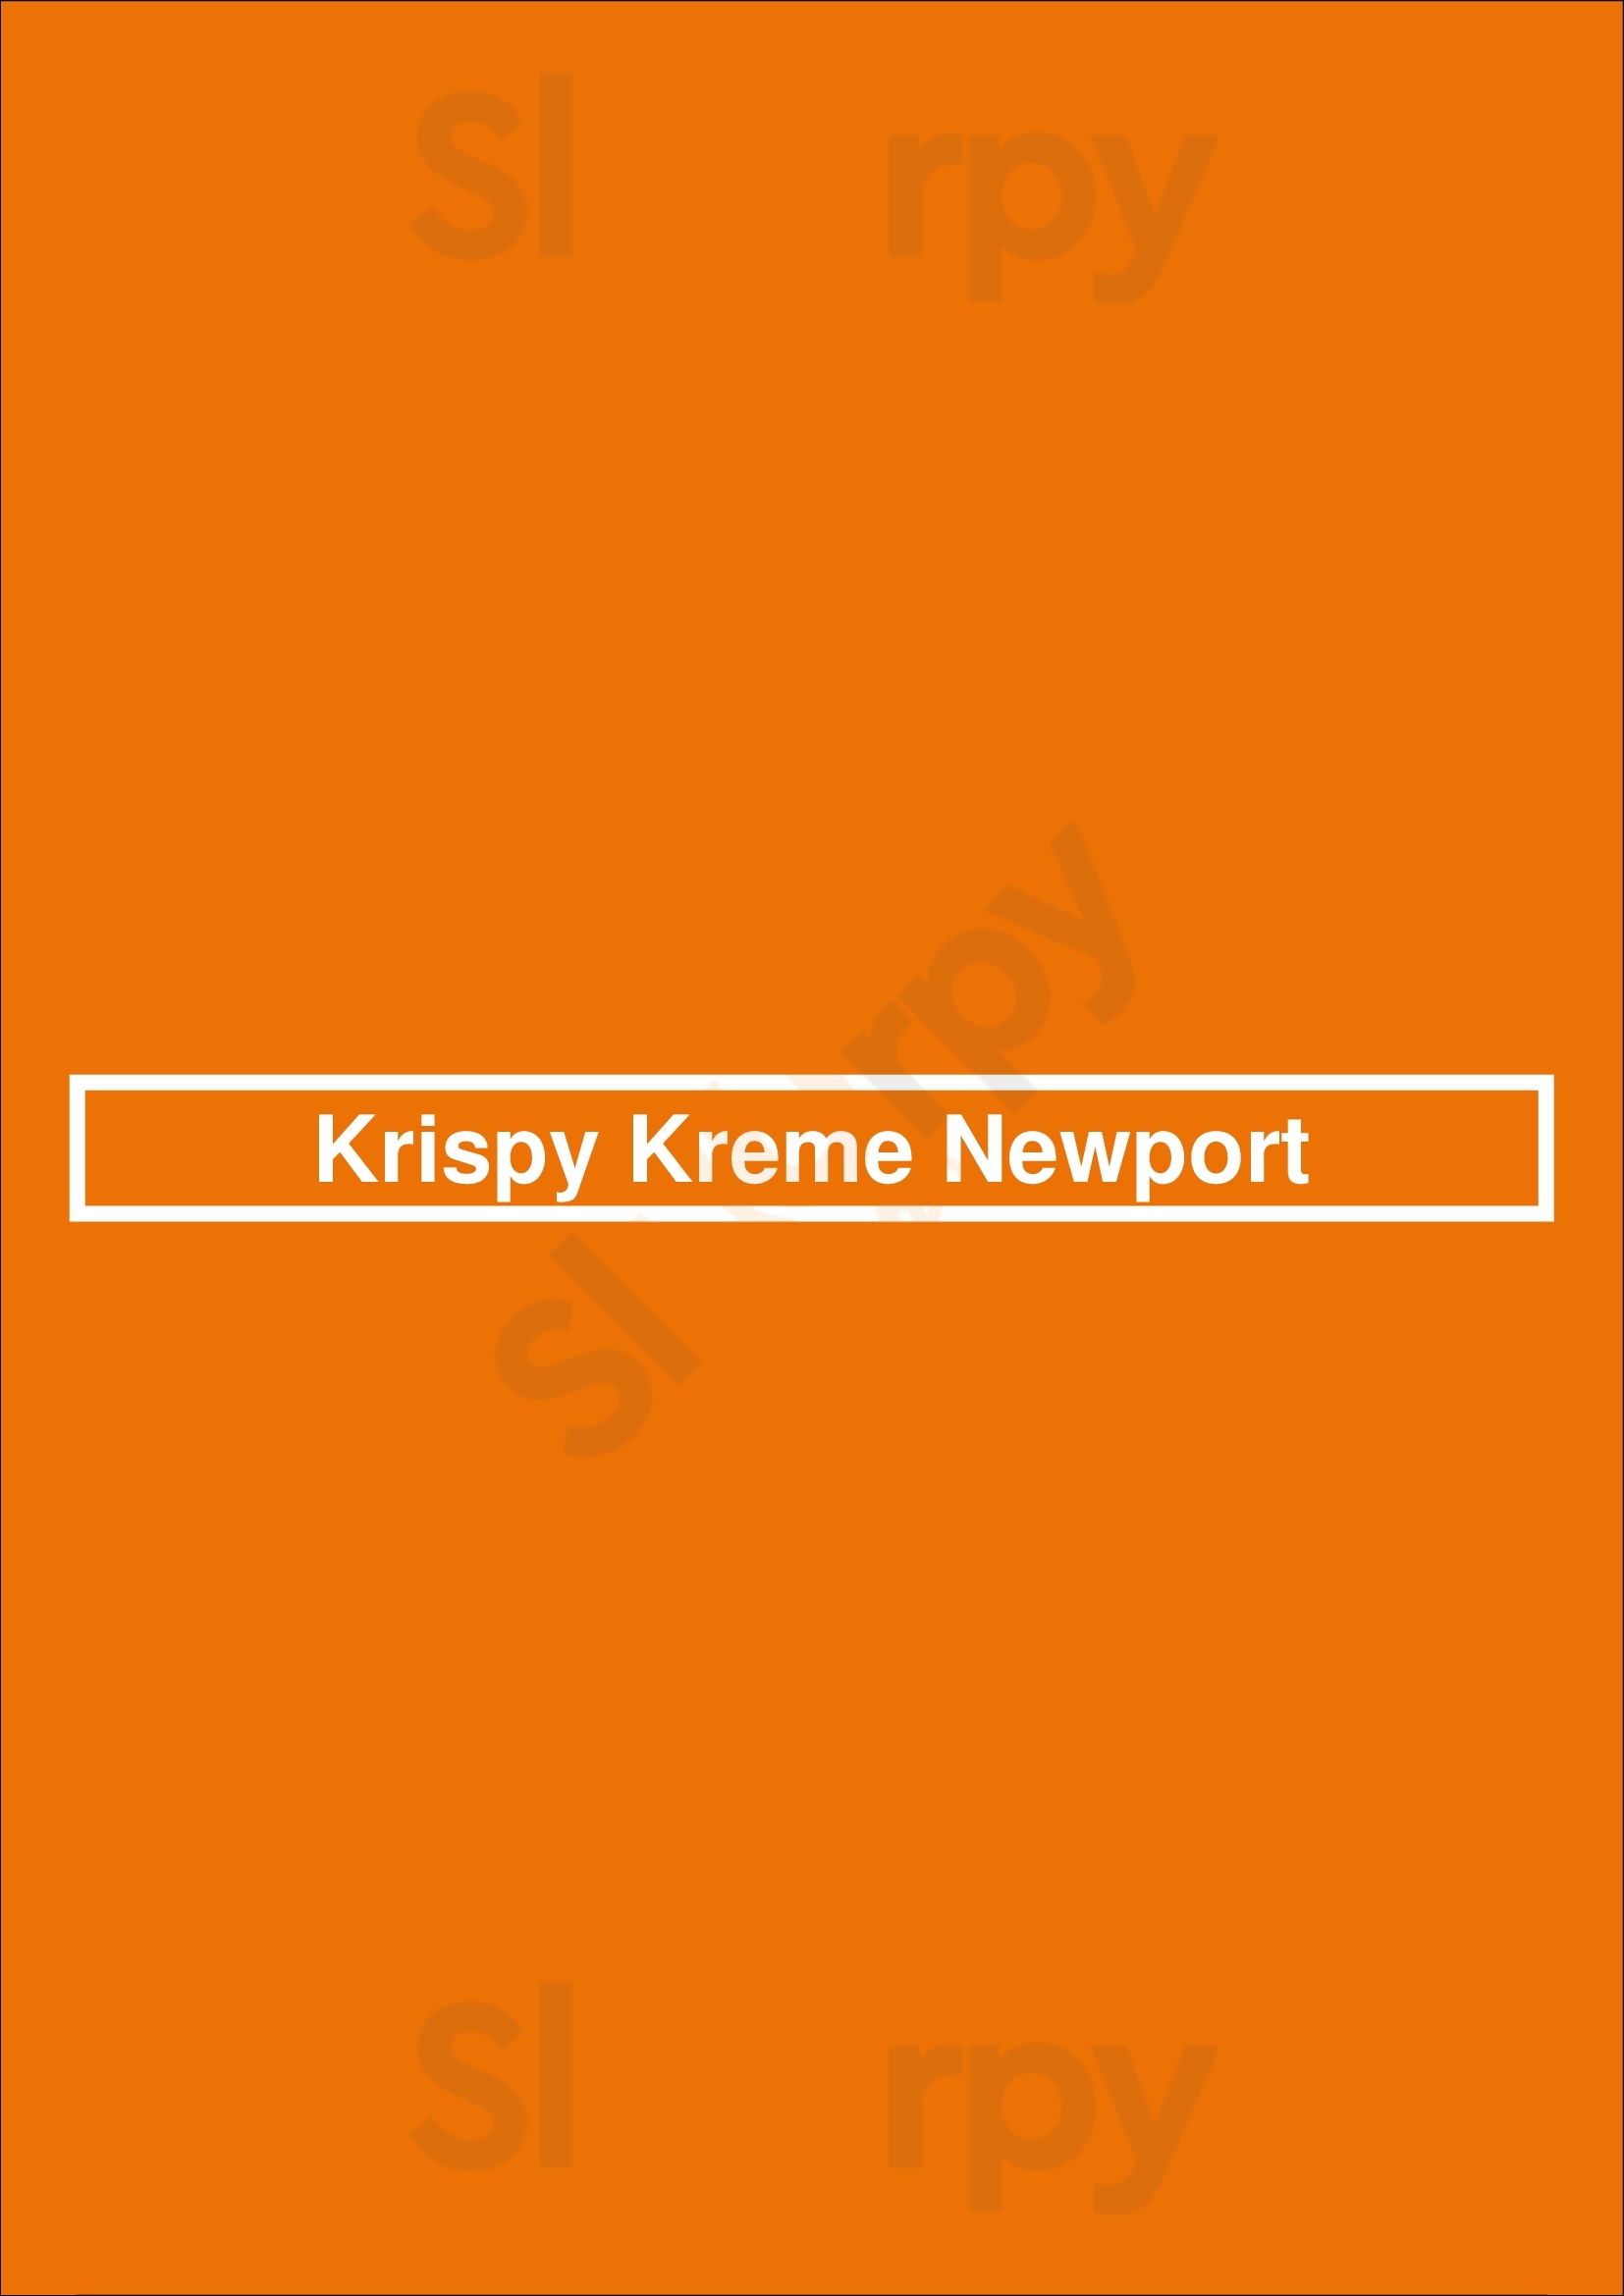 Krispy Kreme Newport Newport Menu - 1